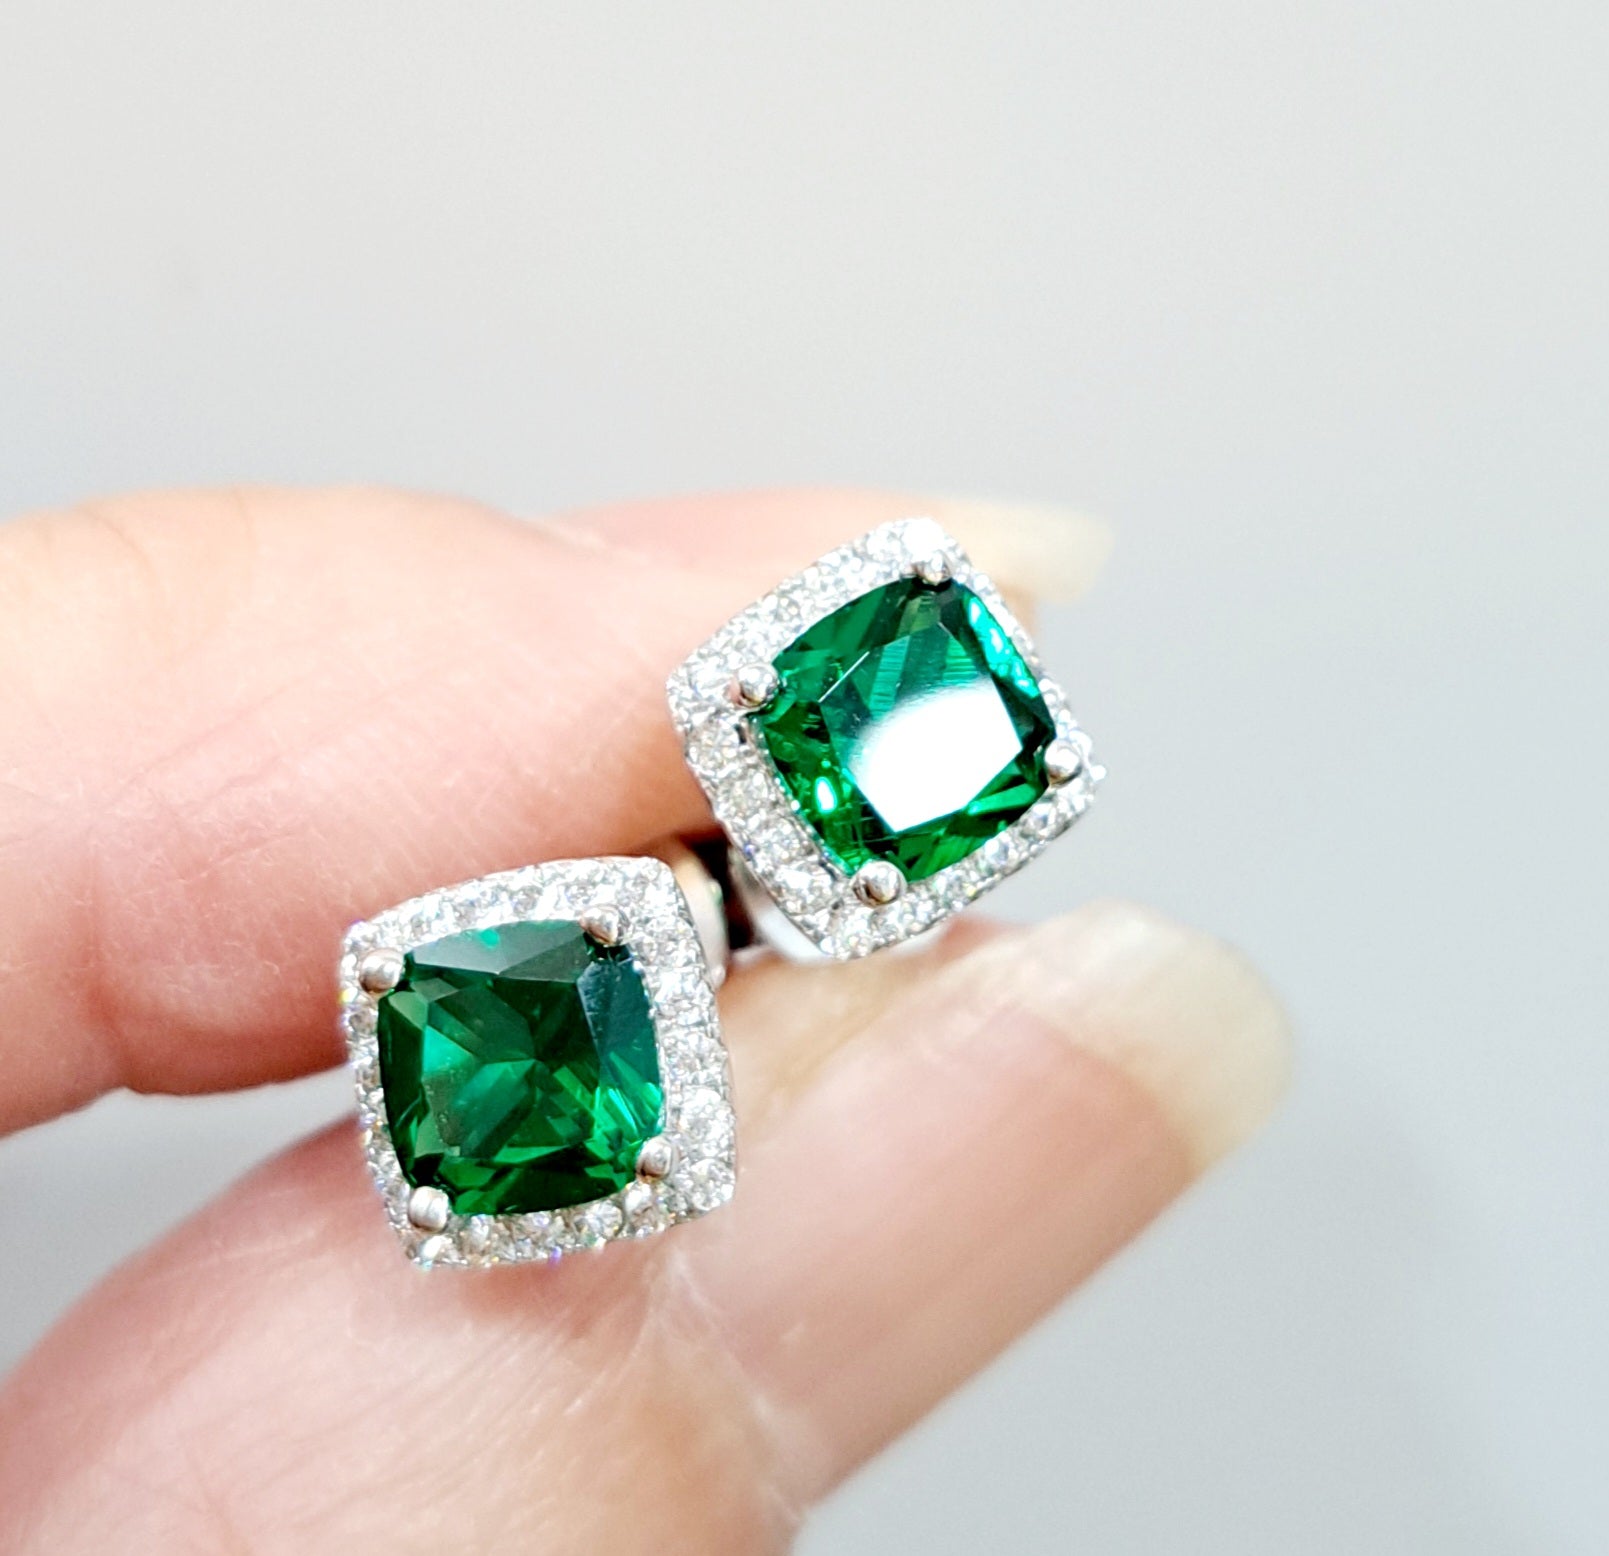 Halo Emerald Scintilli Earrings